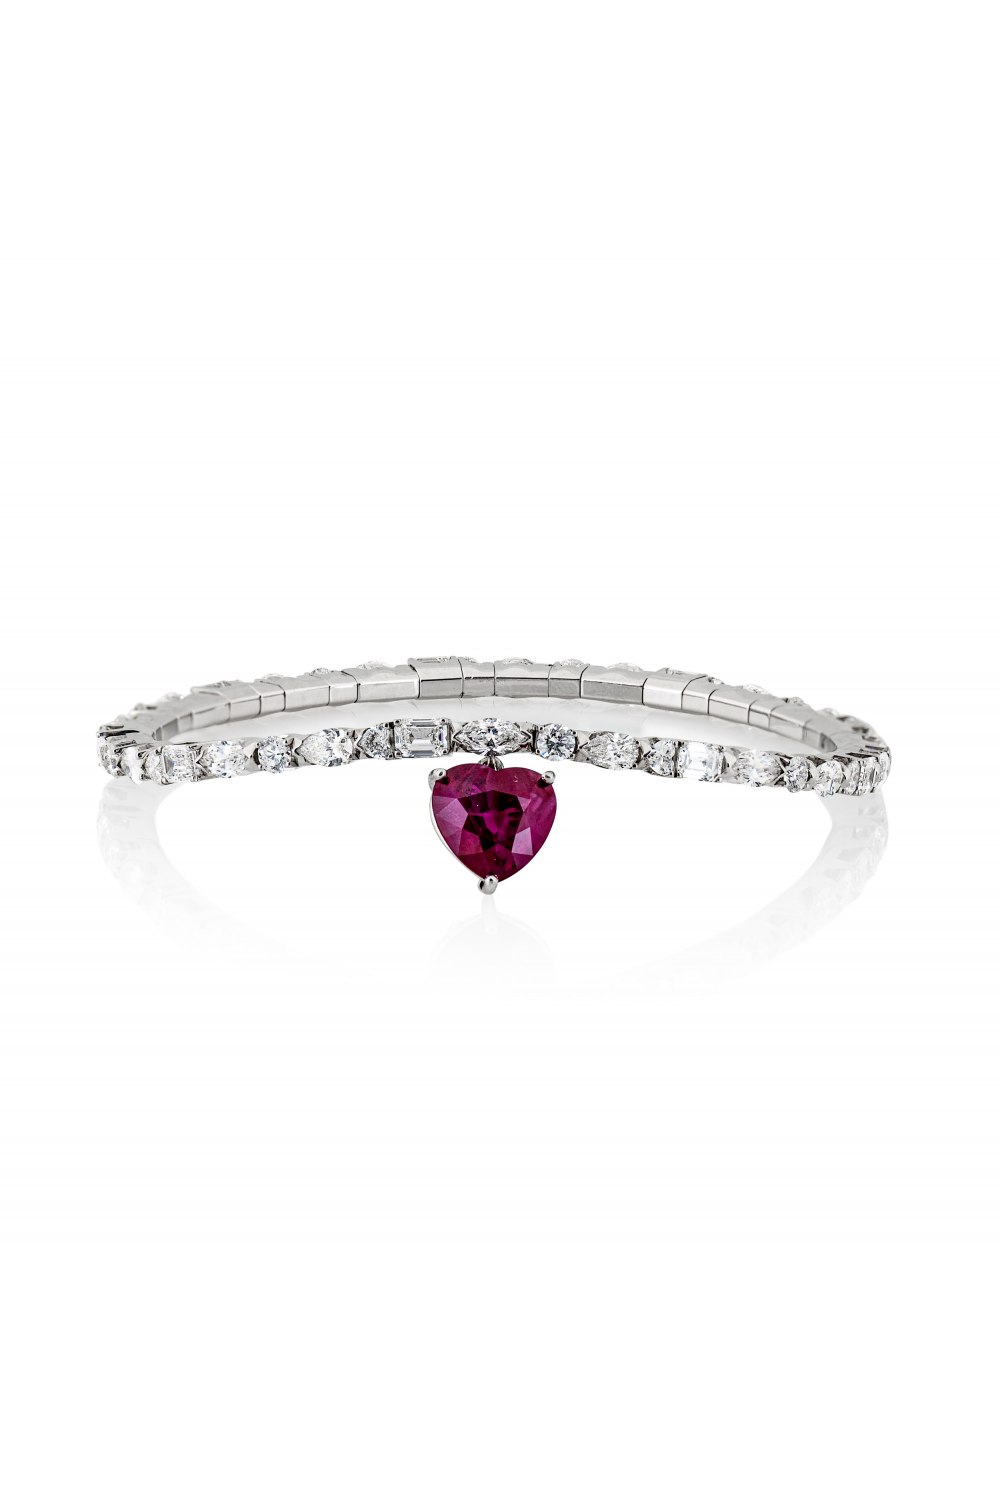 KESSARIS - Ruby Heart Diamond Bracelet